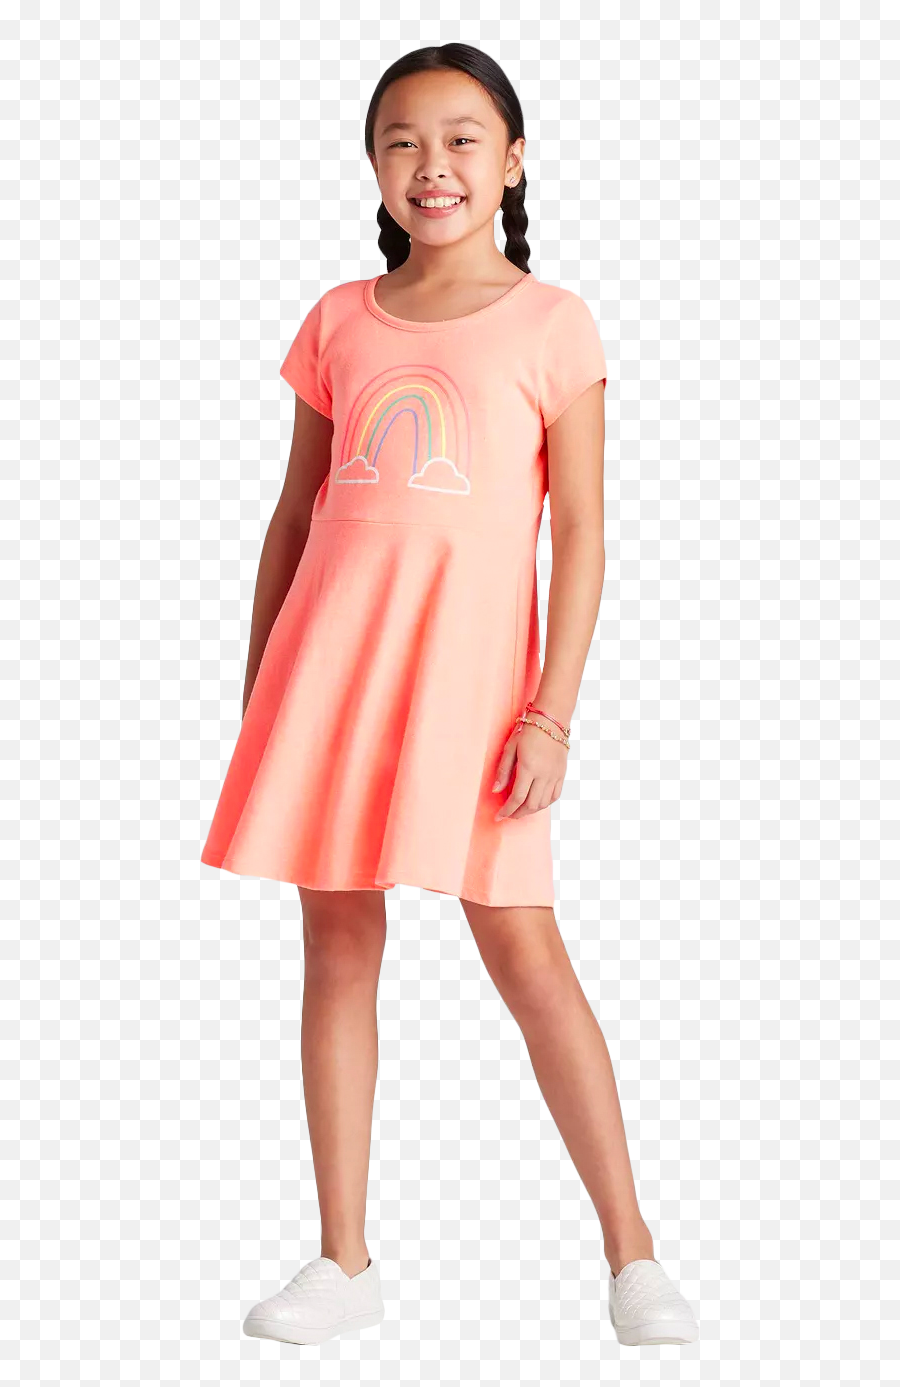 Cat U0026amp Jack Girlsu00268217 Short Sleeve Rainbow Dress Emoji,Emoji Dress Transparent